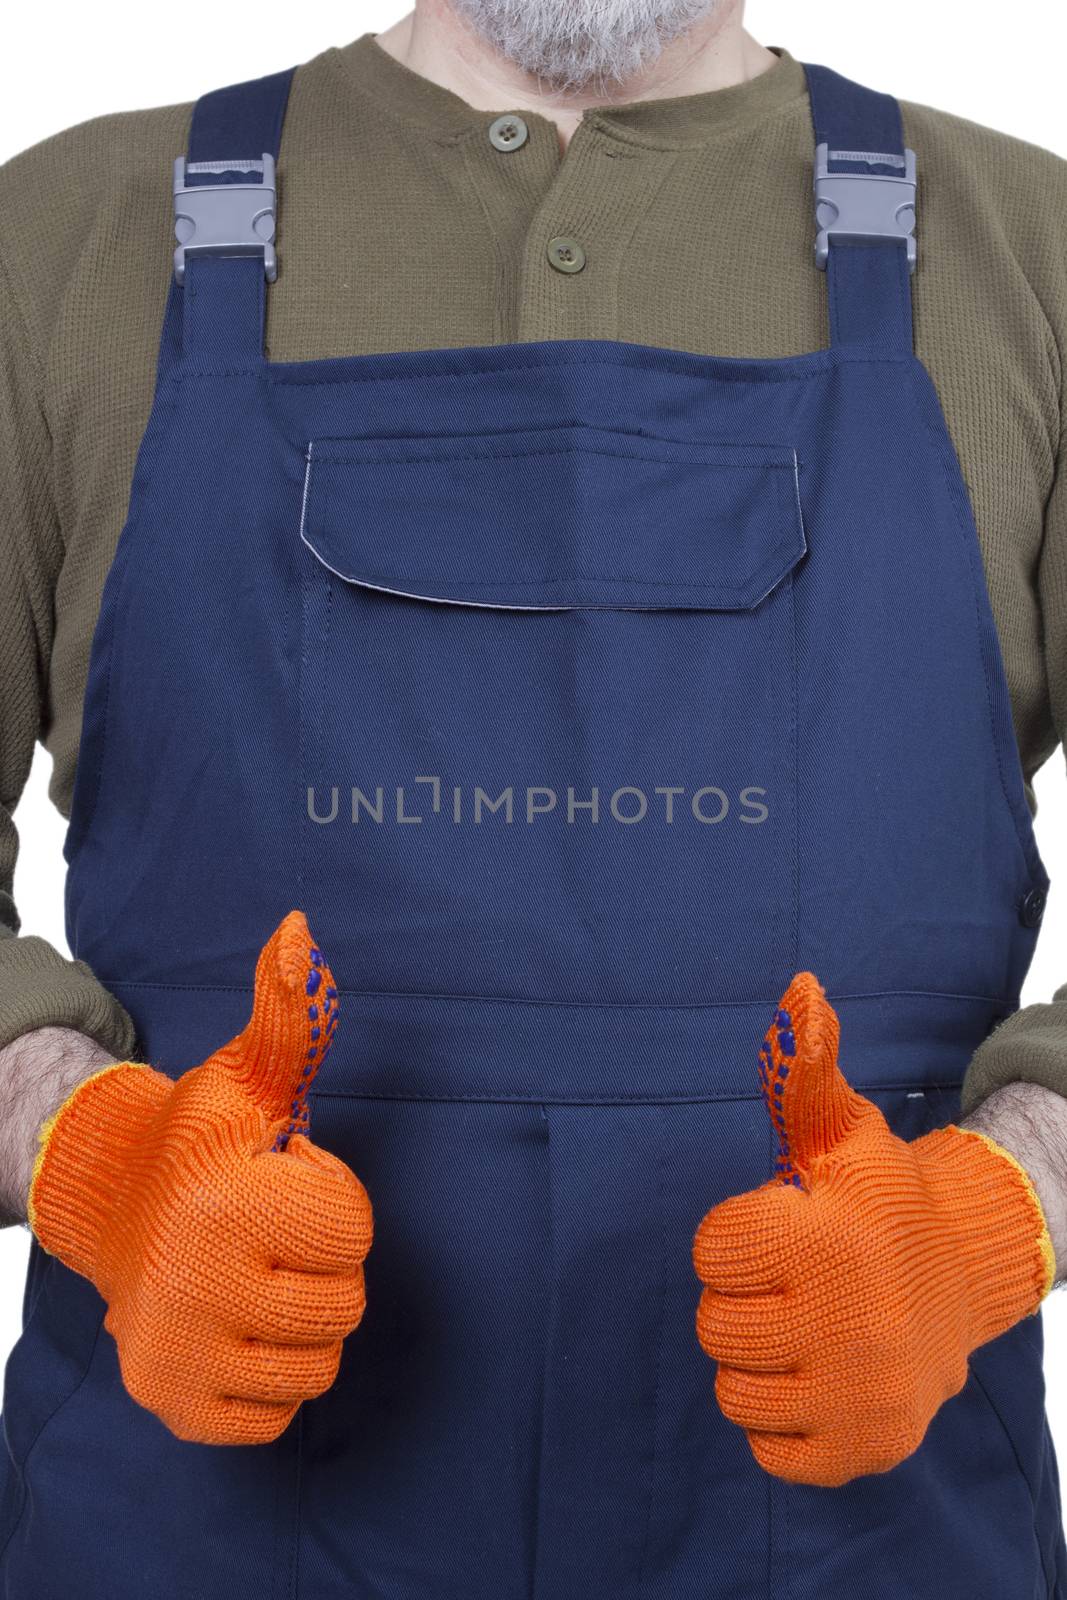 Hands of the worker in blue overalls, wearing orange gloves